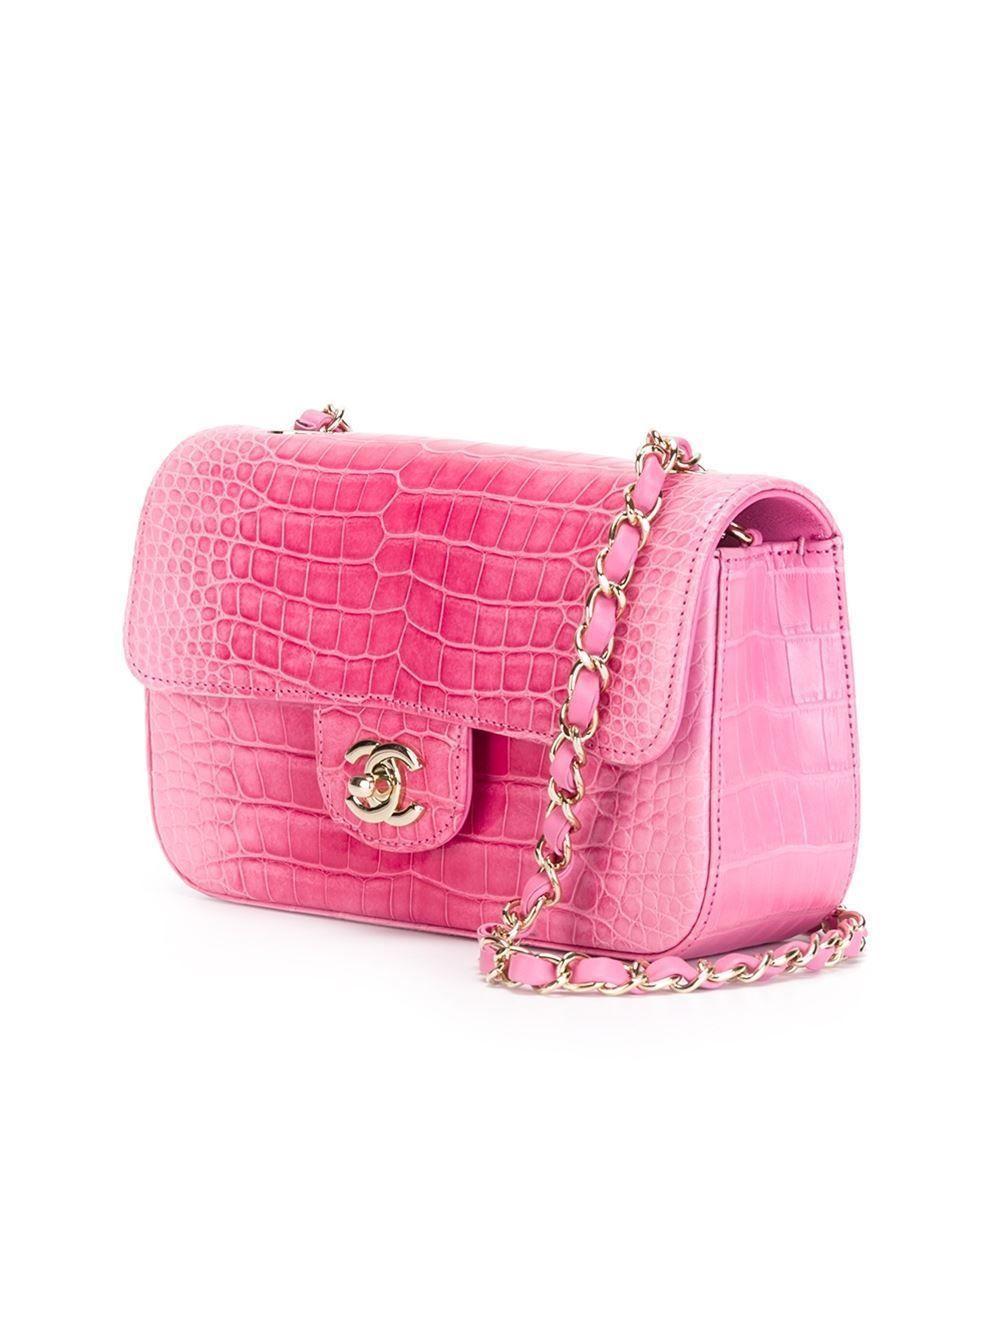 Pink Crocodile Logo - Chanel Pink Crocodile Shoulder Bag. Hand Me the Bag. Chanel